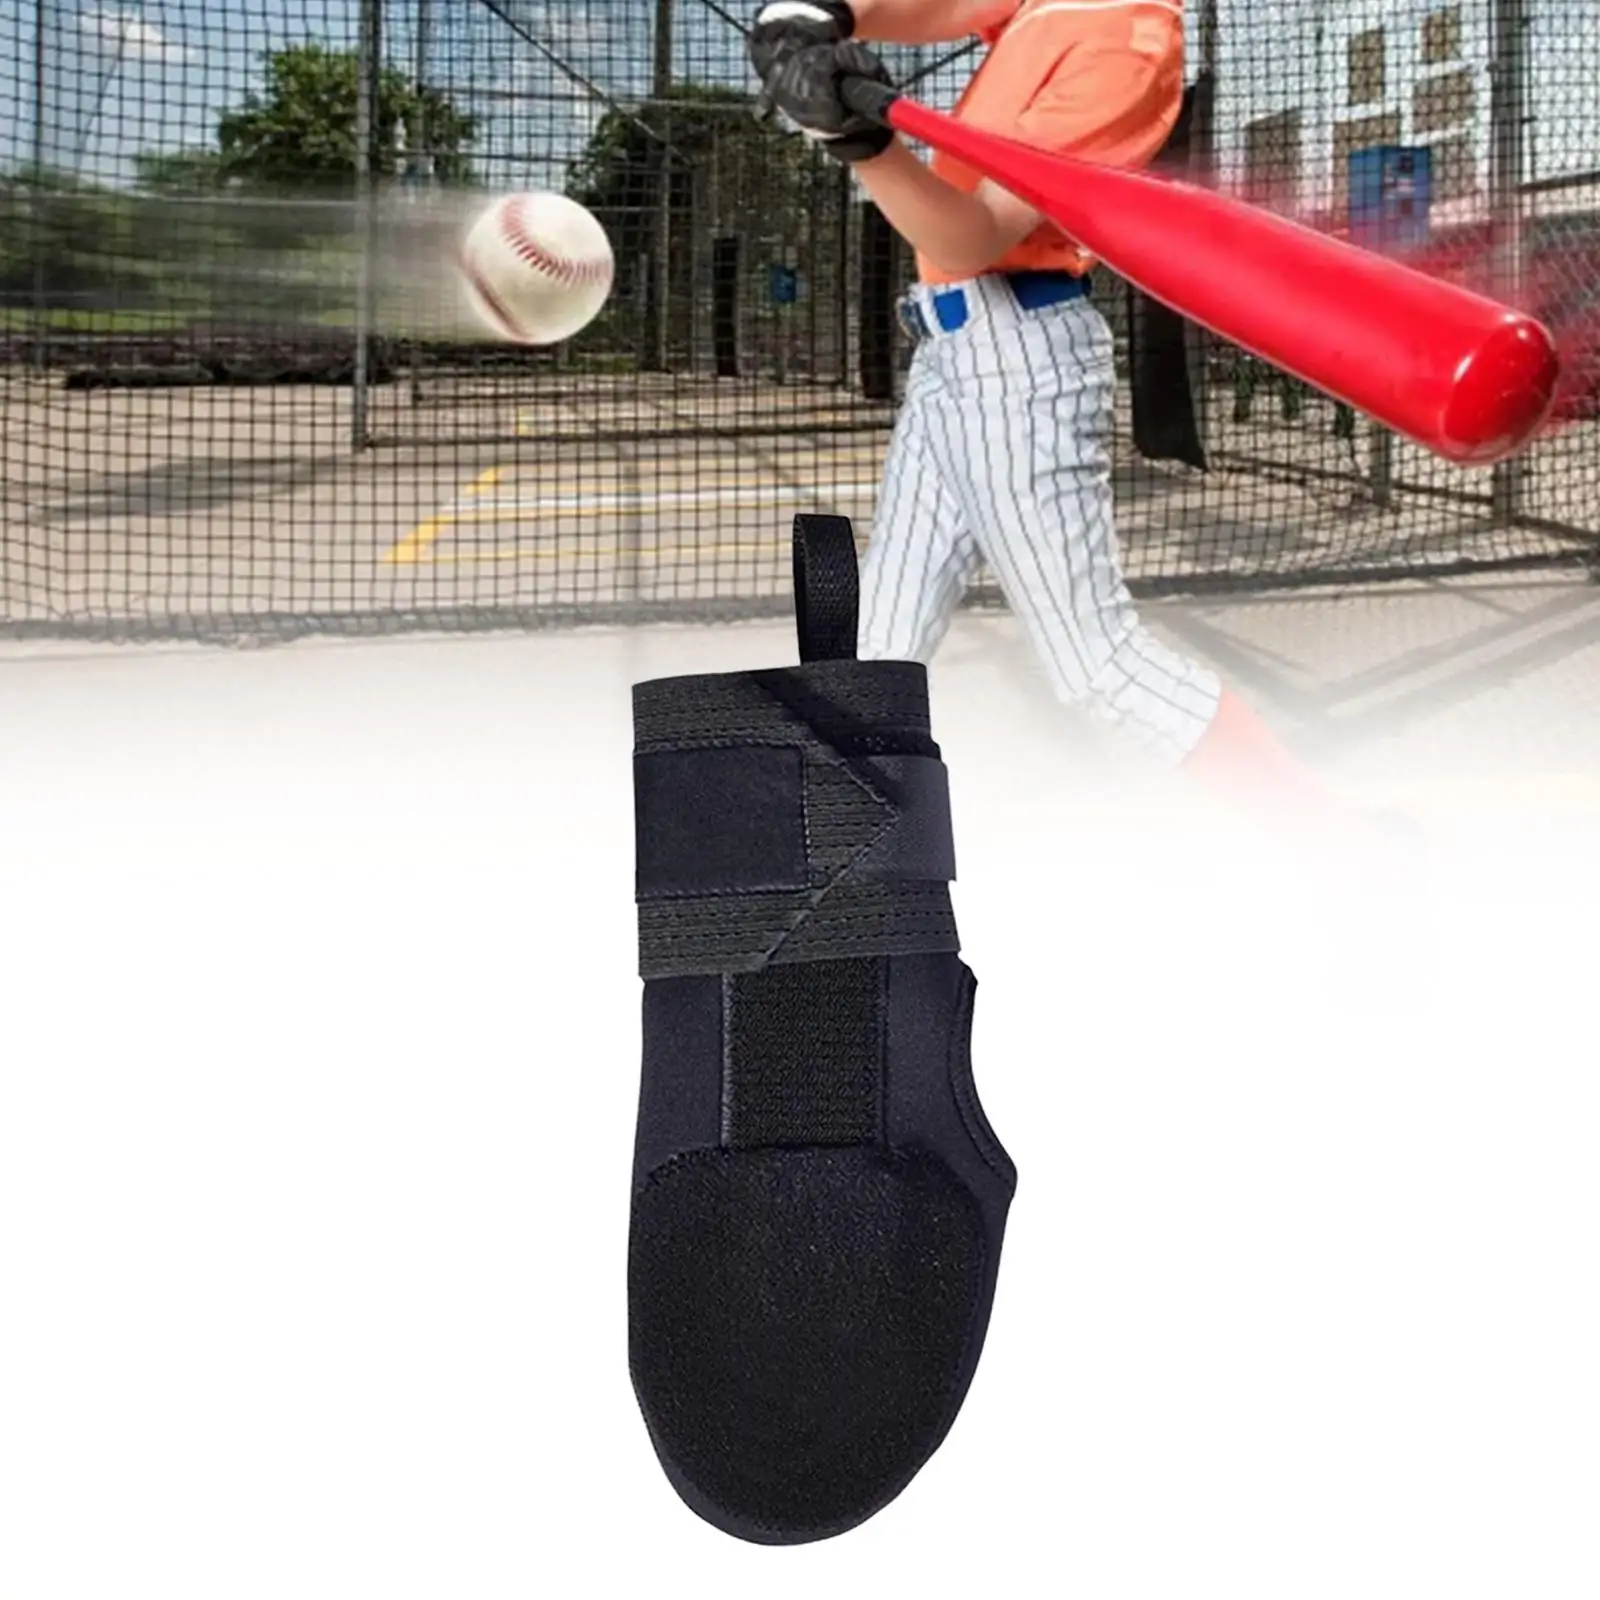 Hand Protection Breathable Shield Protective Baseball Sliding Gloves Softball Sliding Mitt for Exercise Outdoor Sports Training